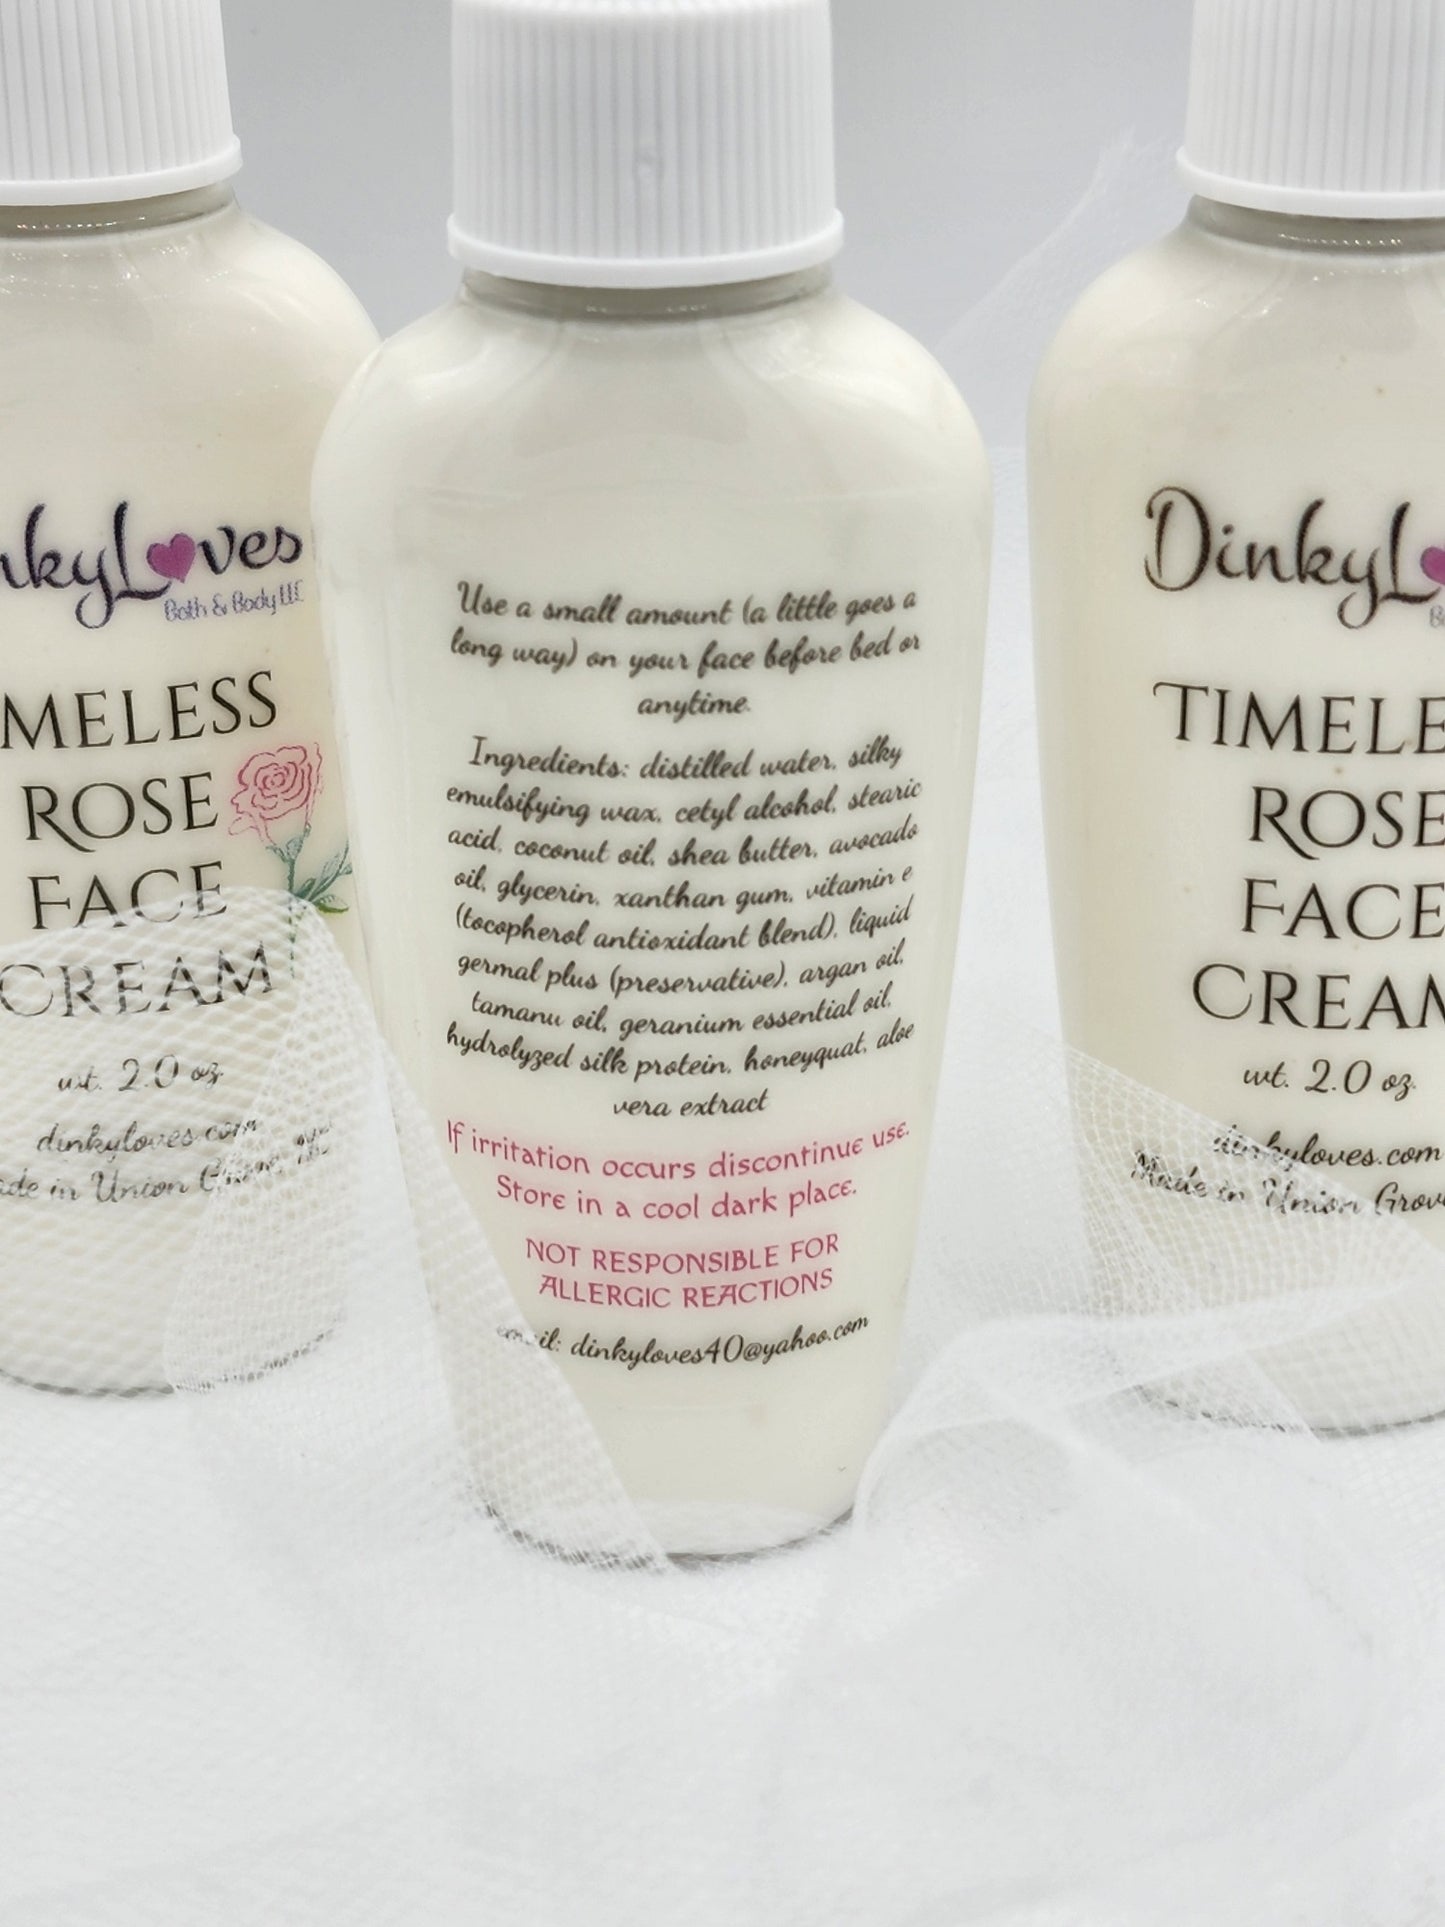 TIMELESS ROSE FACE Cream / Unique Gift Idea / Silky Face Creams / Hand Crafted Face Cream